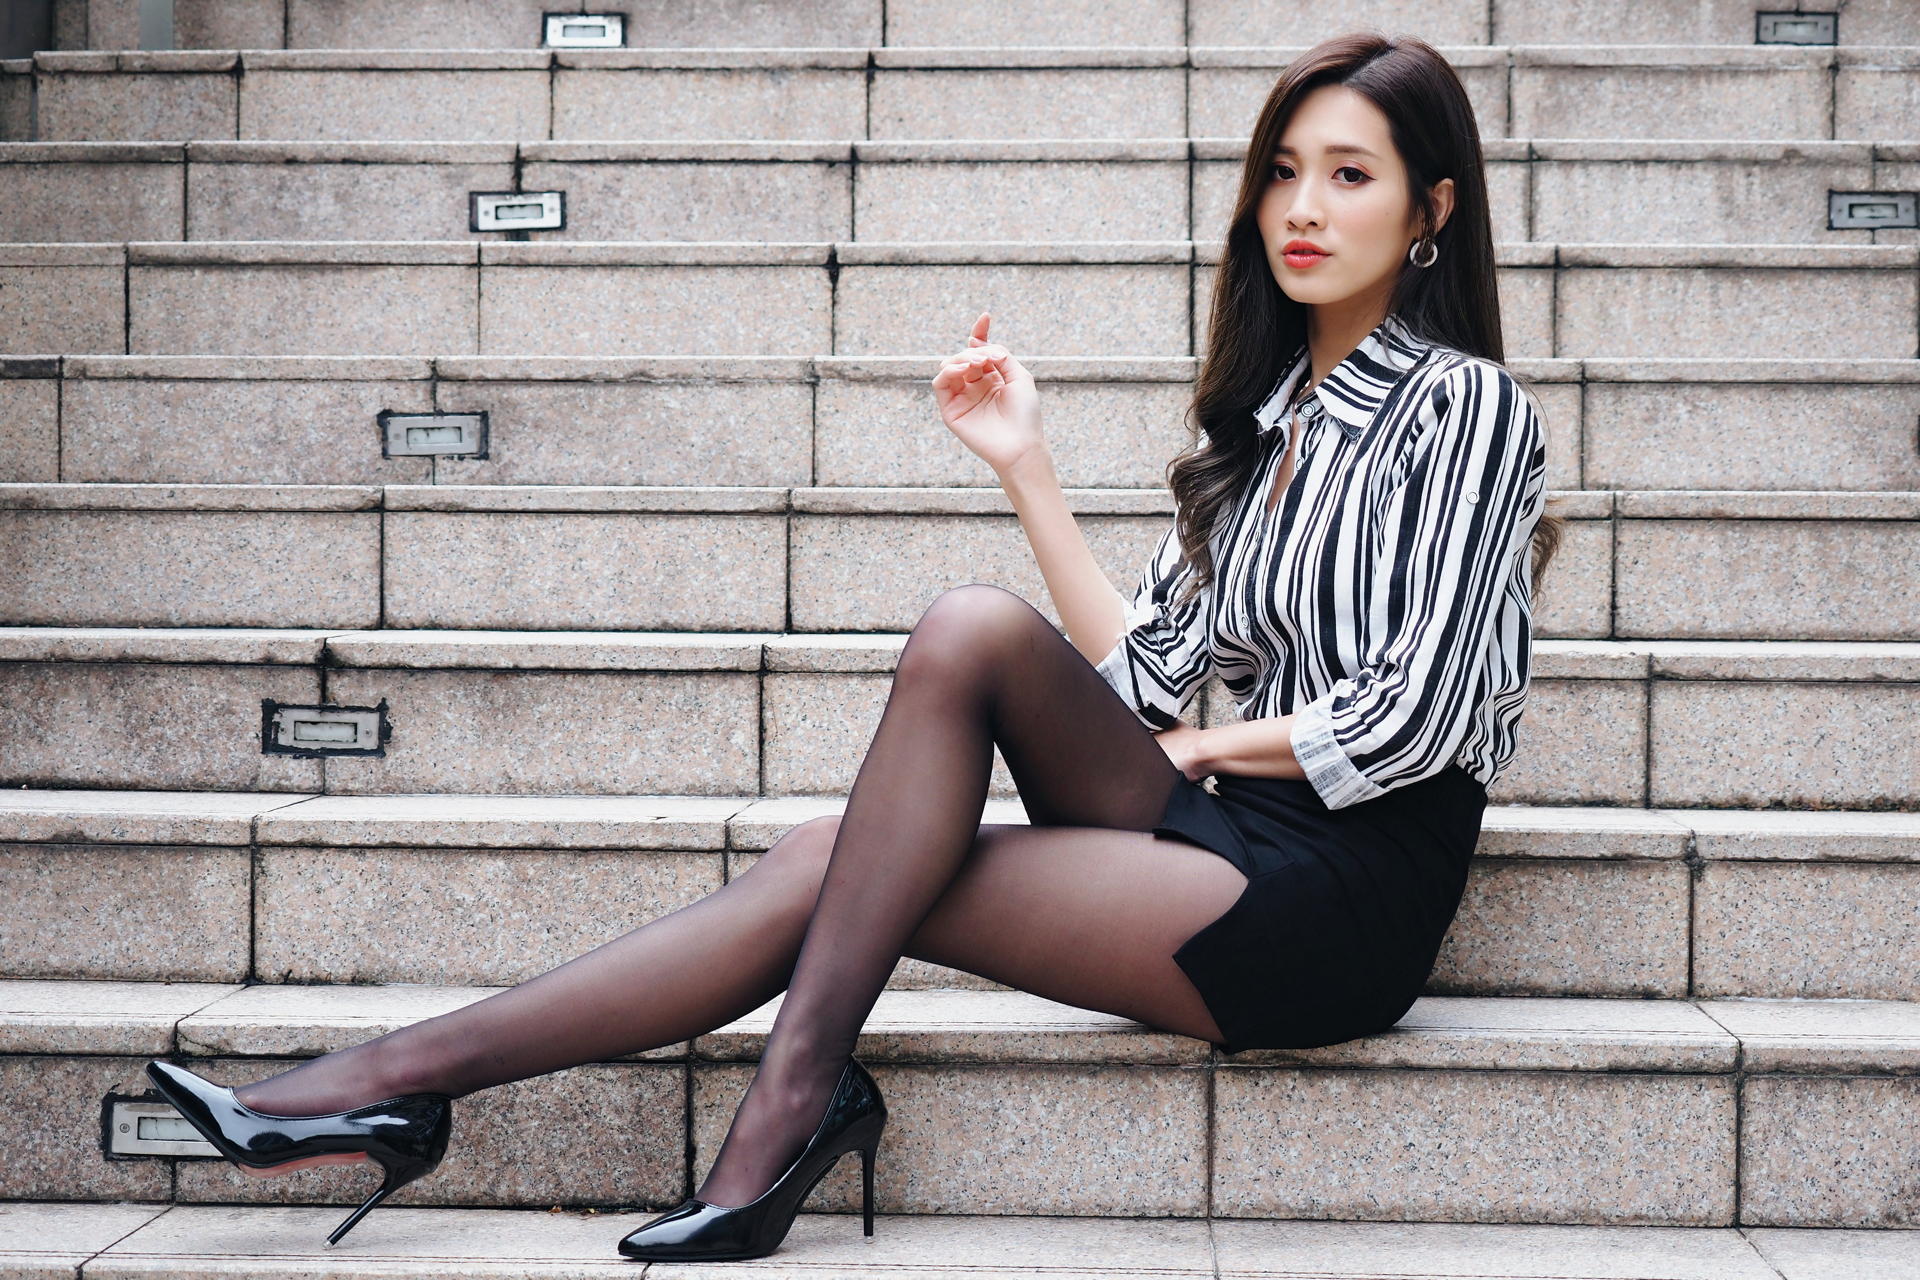 Asian Model Women Long Hair Dark Hair Black Heels Nylons Black Skirts Striped Shirt Sitting Stairs 1920x1280